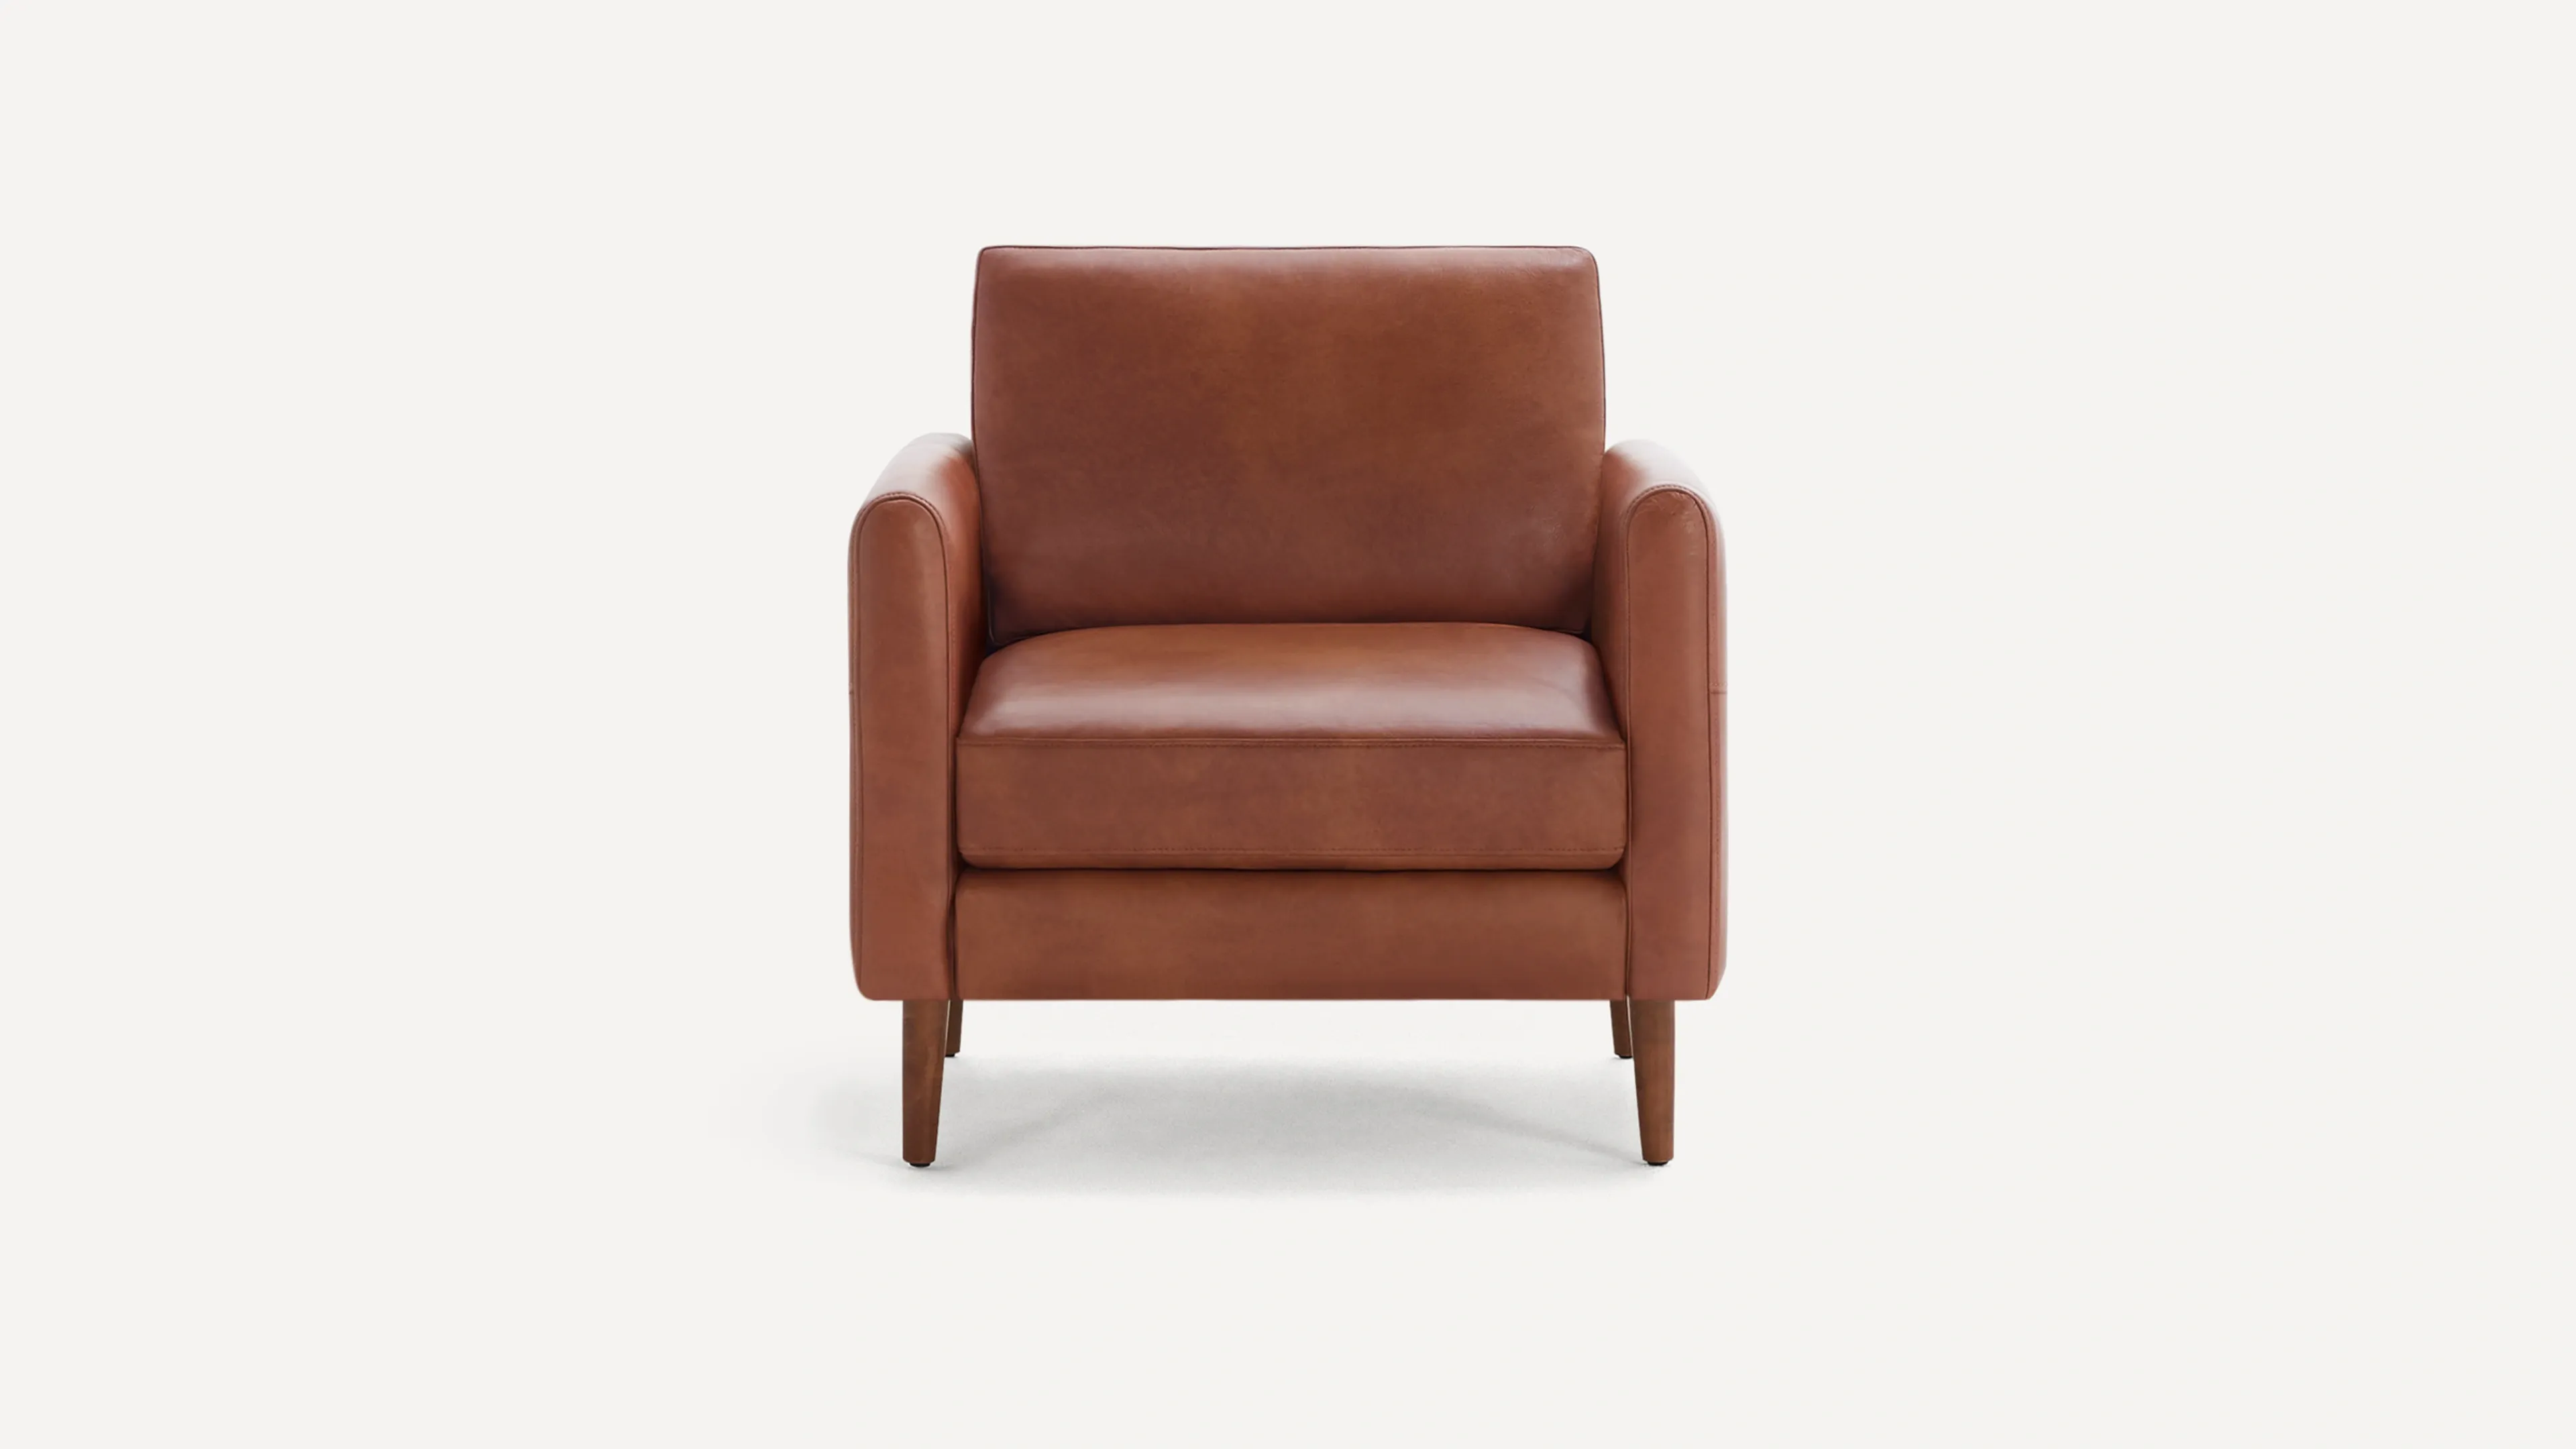 Original Nomad Armchair in Chestnut Leather